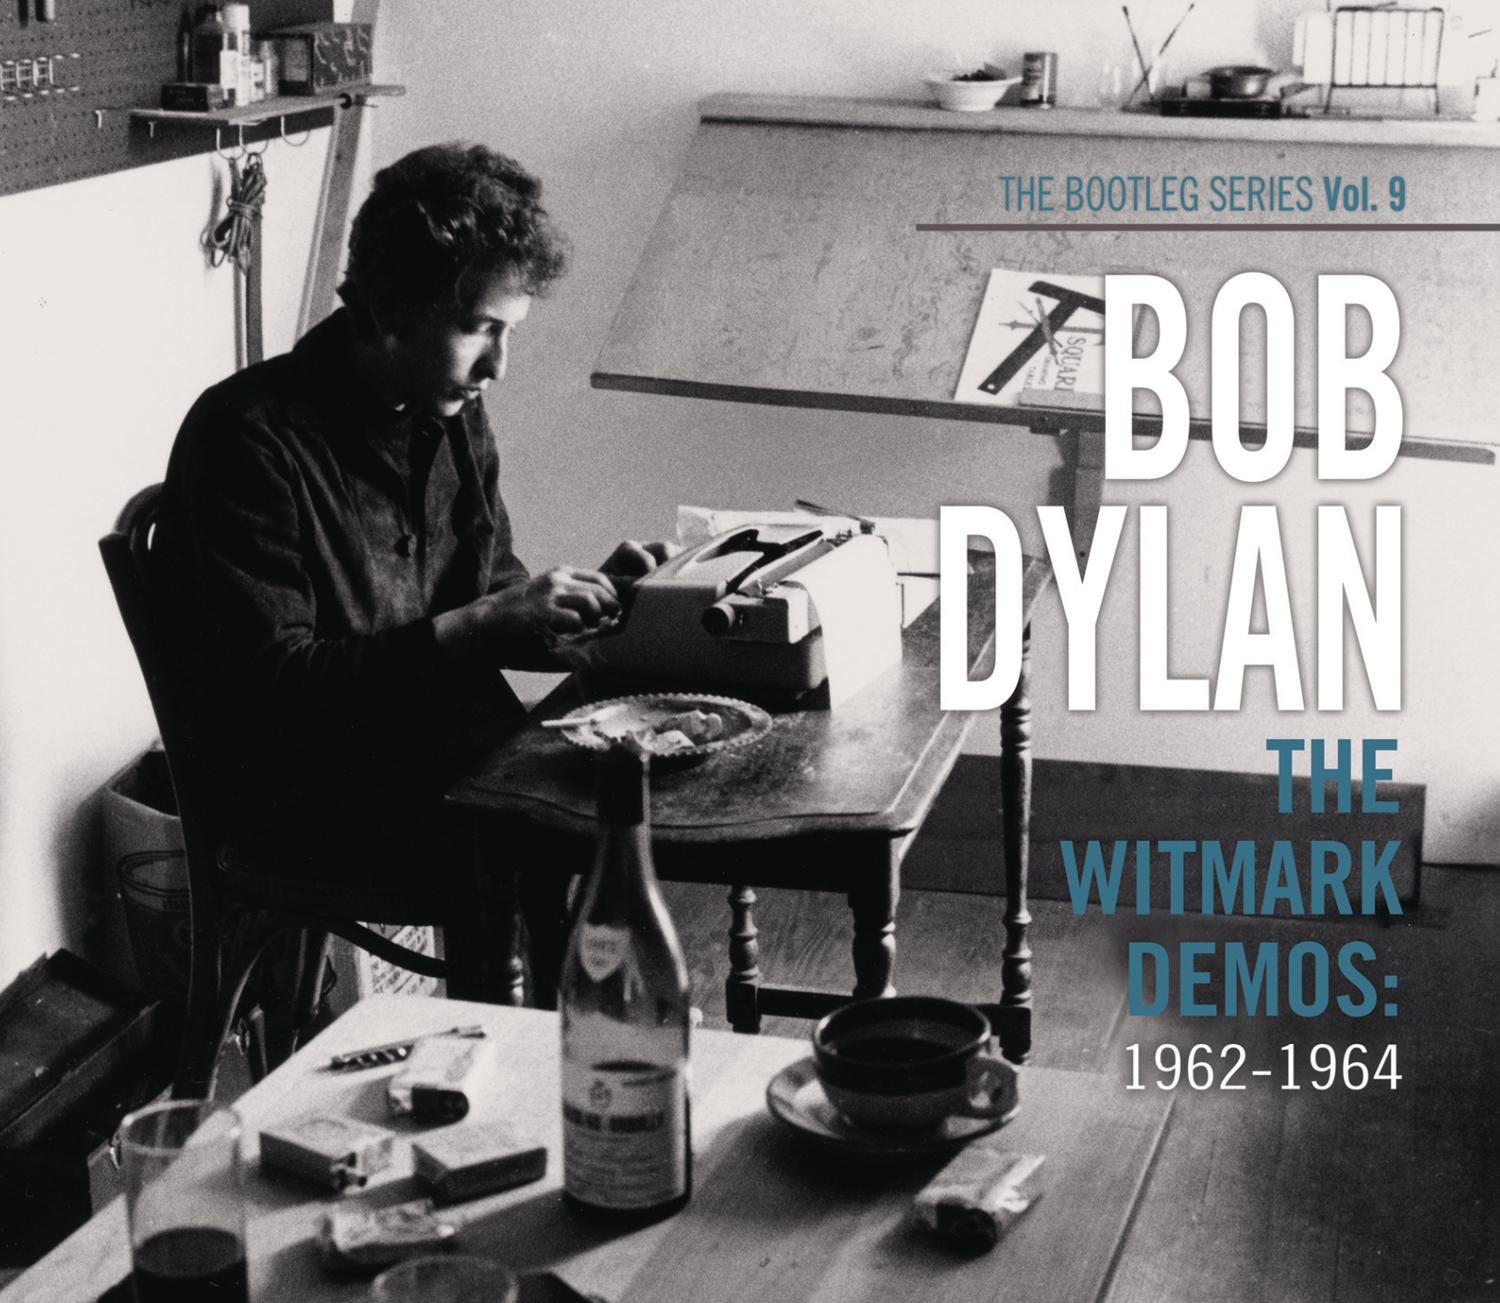 BOB DYLAN - THE WITMARK DEMOS: 1962-1964 (The Bootleg Series Vol. 9)